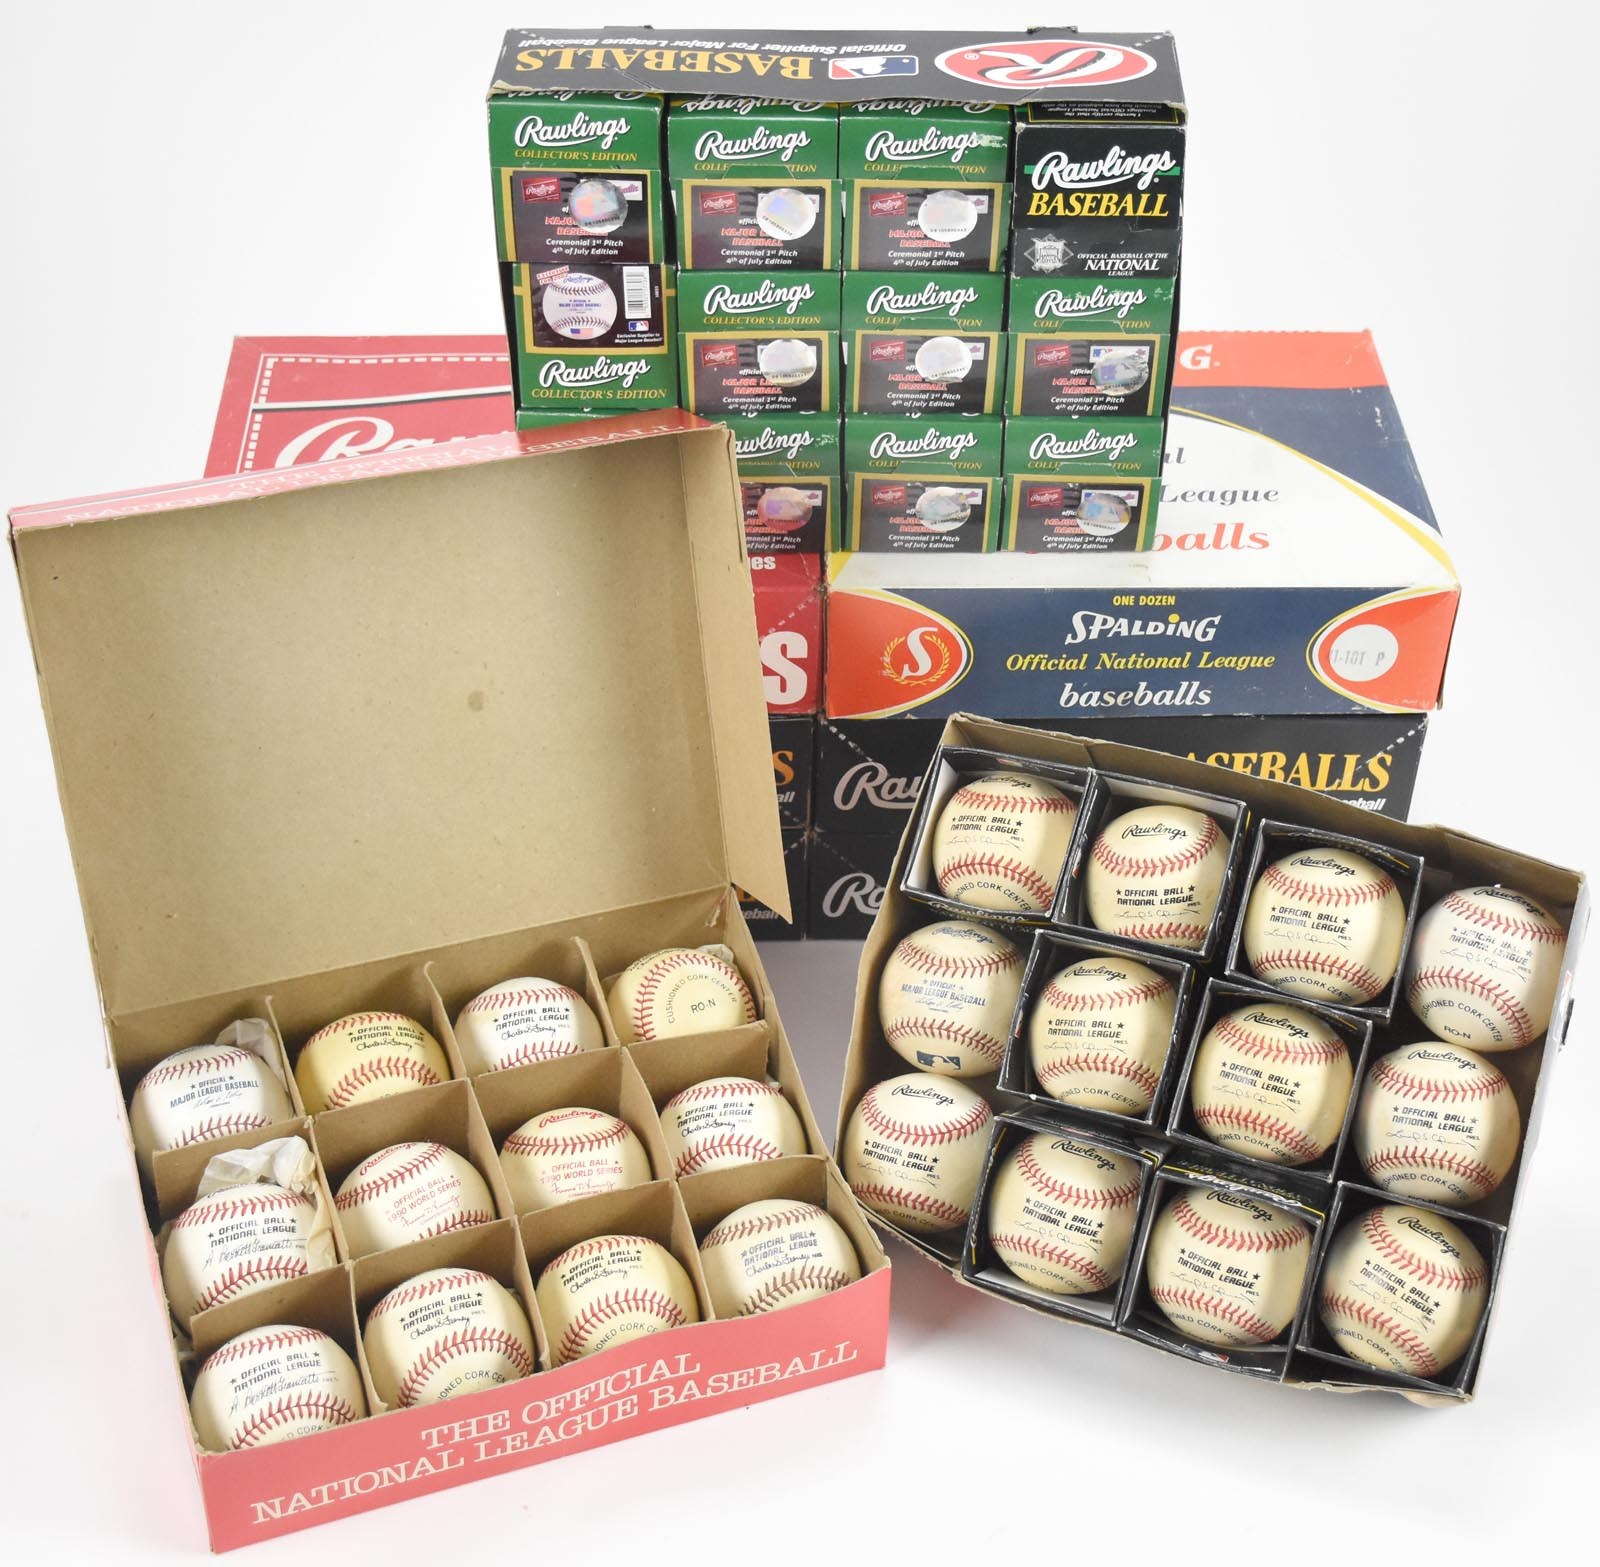 Bernie Stowe Cincinnati Reds Collection - Unused Official National League & Major League Baseballs From The Bernie Stowe Collection (108)